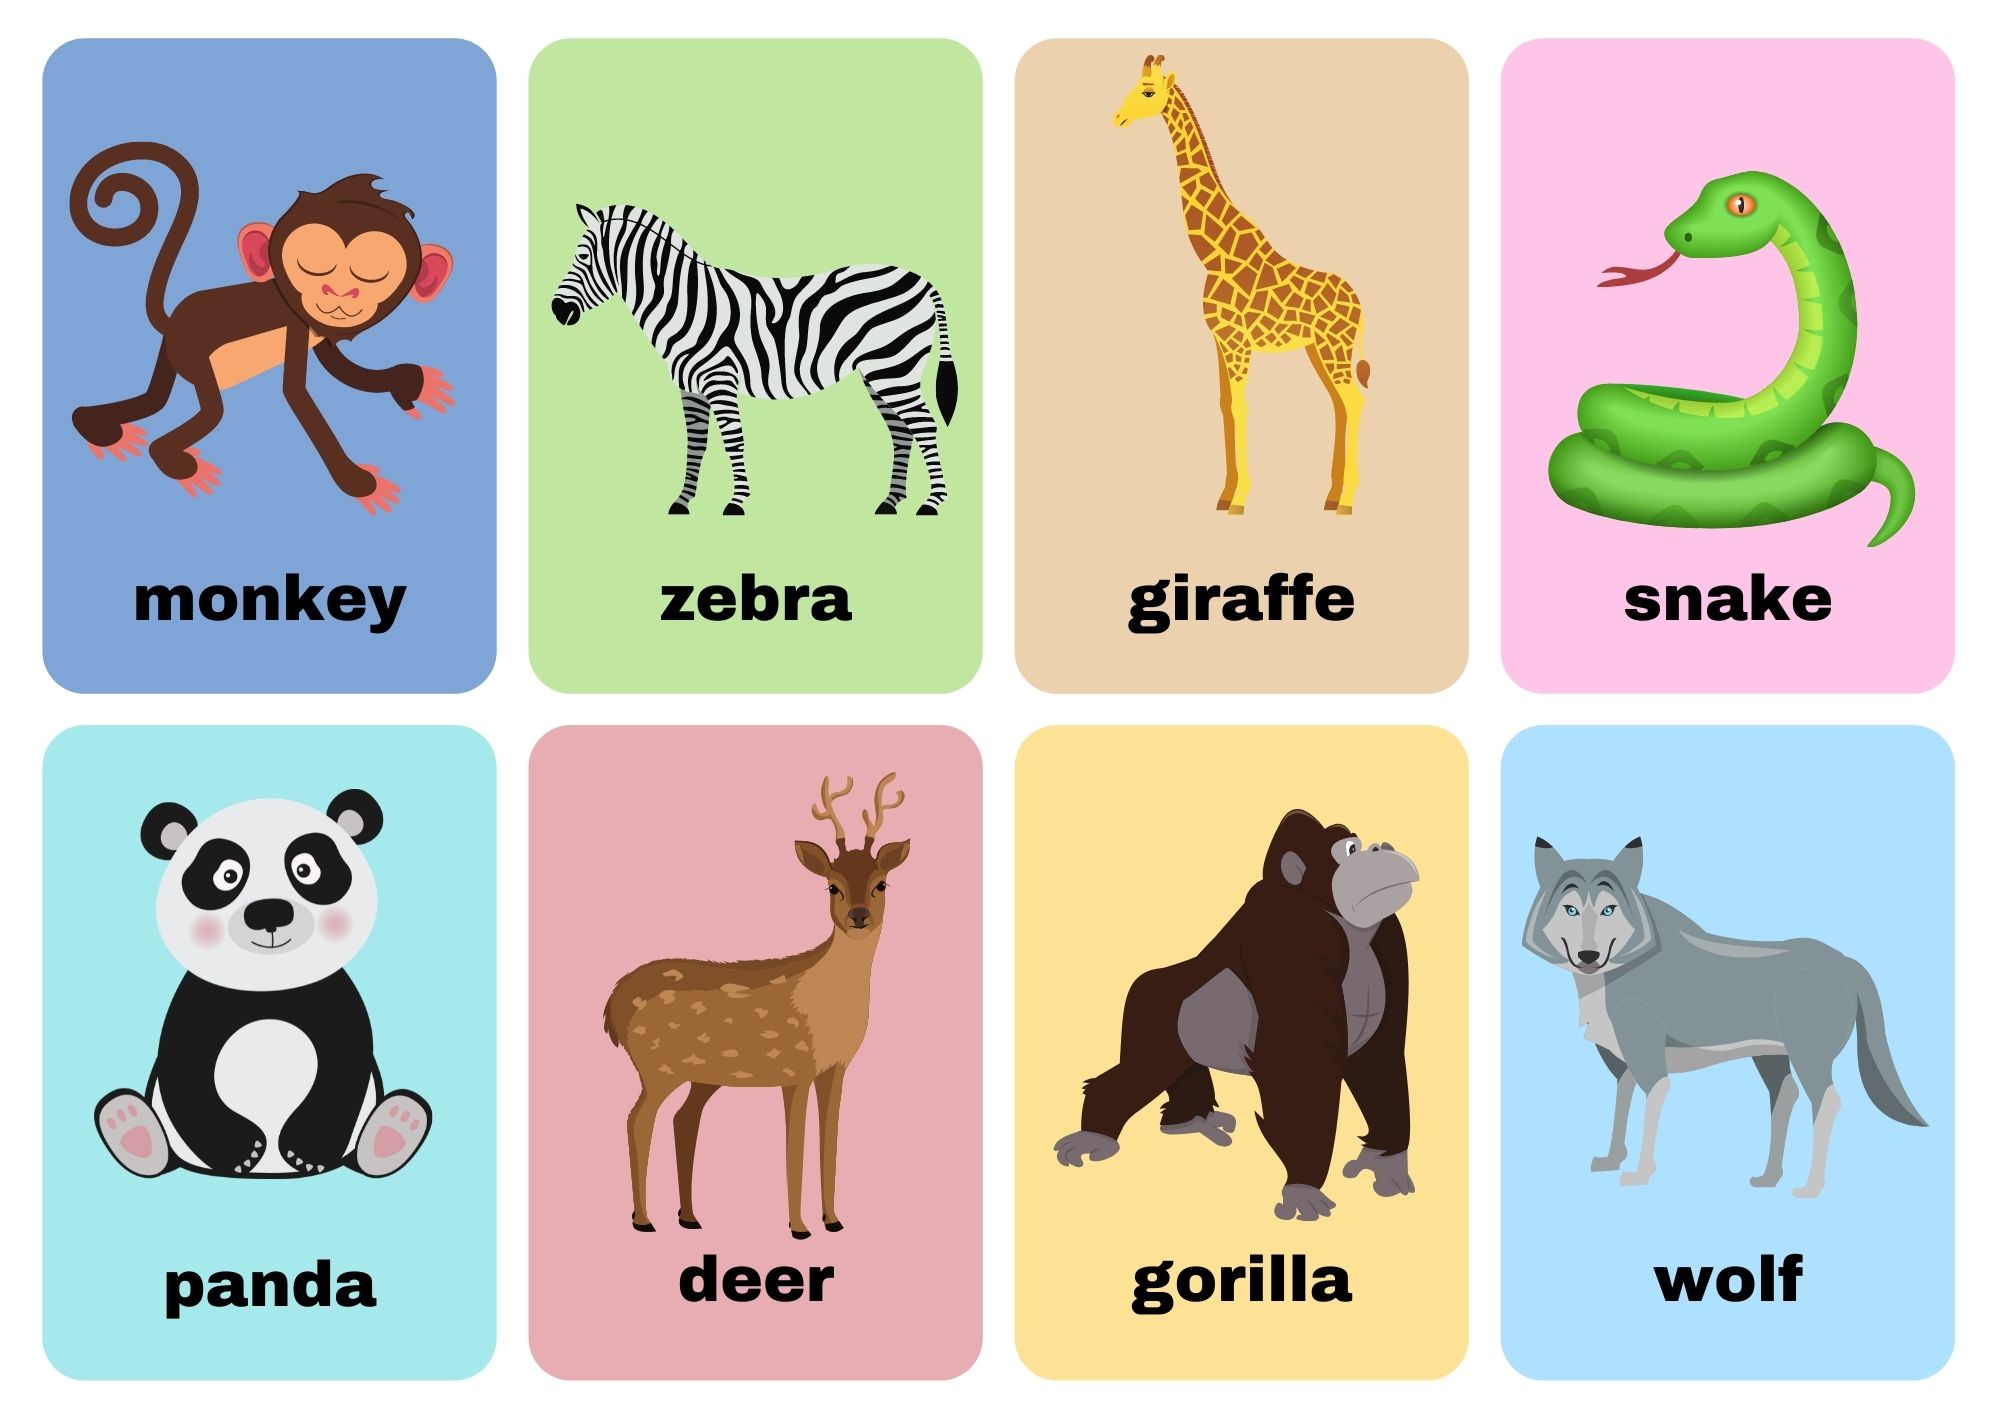 Wild Animal Flashcards With Words use online or free PDF download Includes:  elephant, lion, giraffe, tiger, zebra, monkey, kangaroo, rhino, hippo,  bear, panda, alligator, snake, wolf, frog, fox, frog, gorilla, koala, and